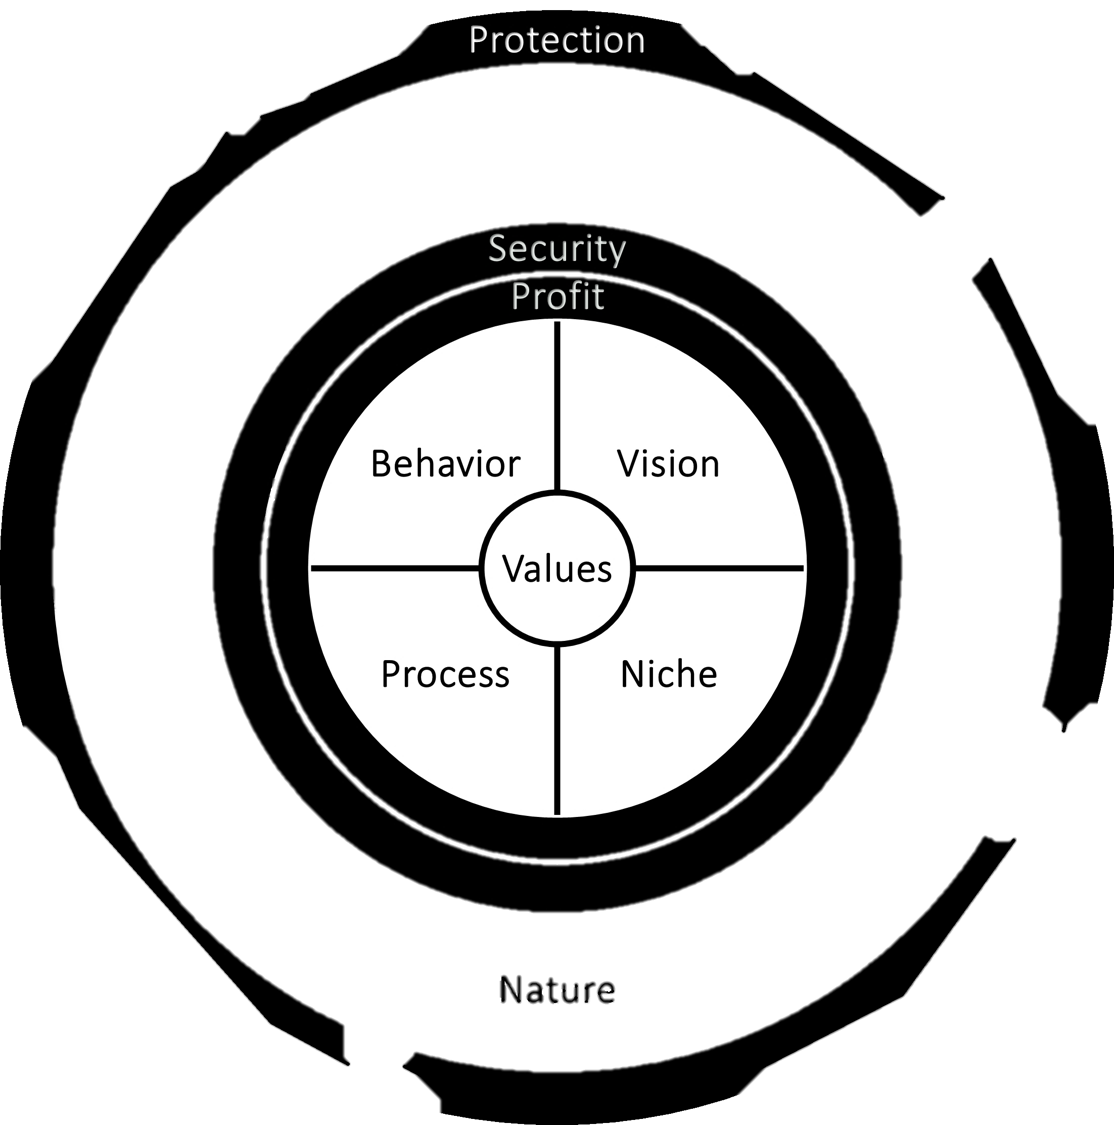 Business model diagram: values, behavior, vision, process, niche, profit, security, nature, protection